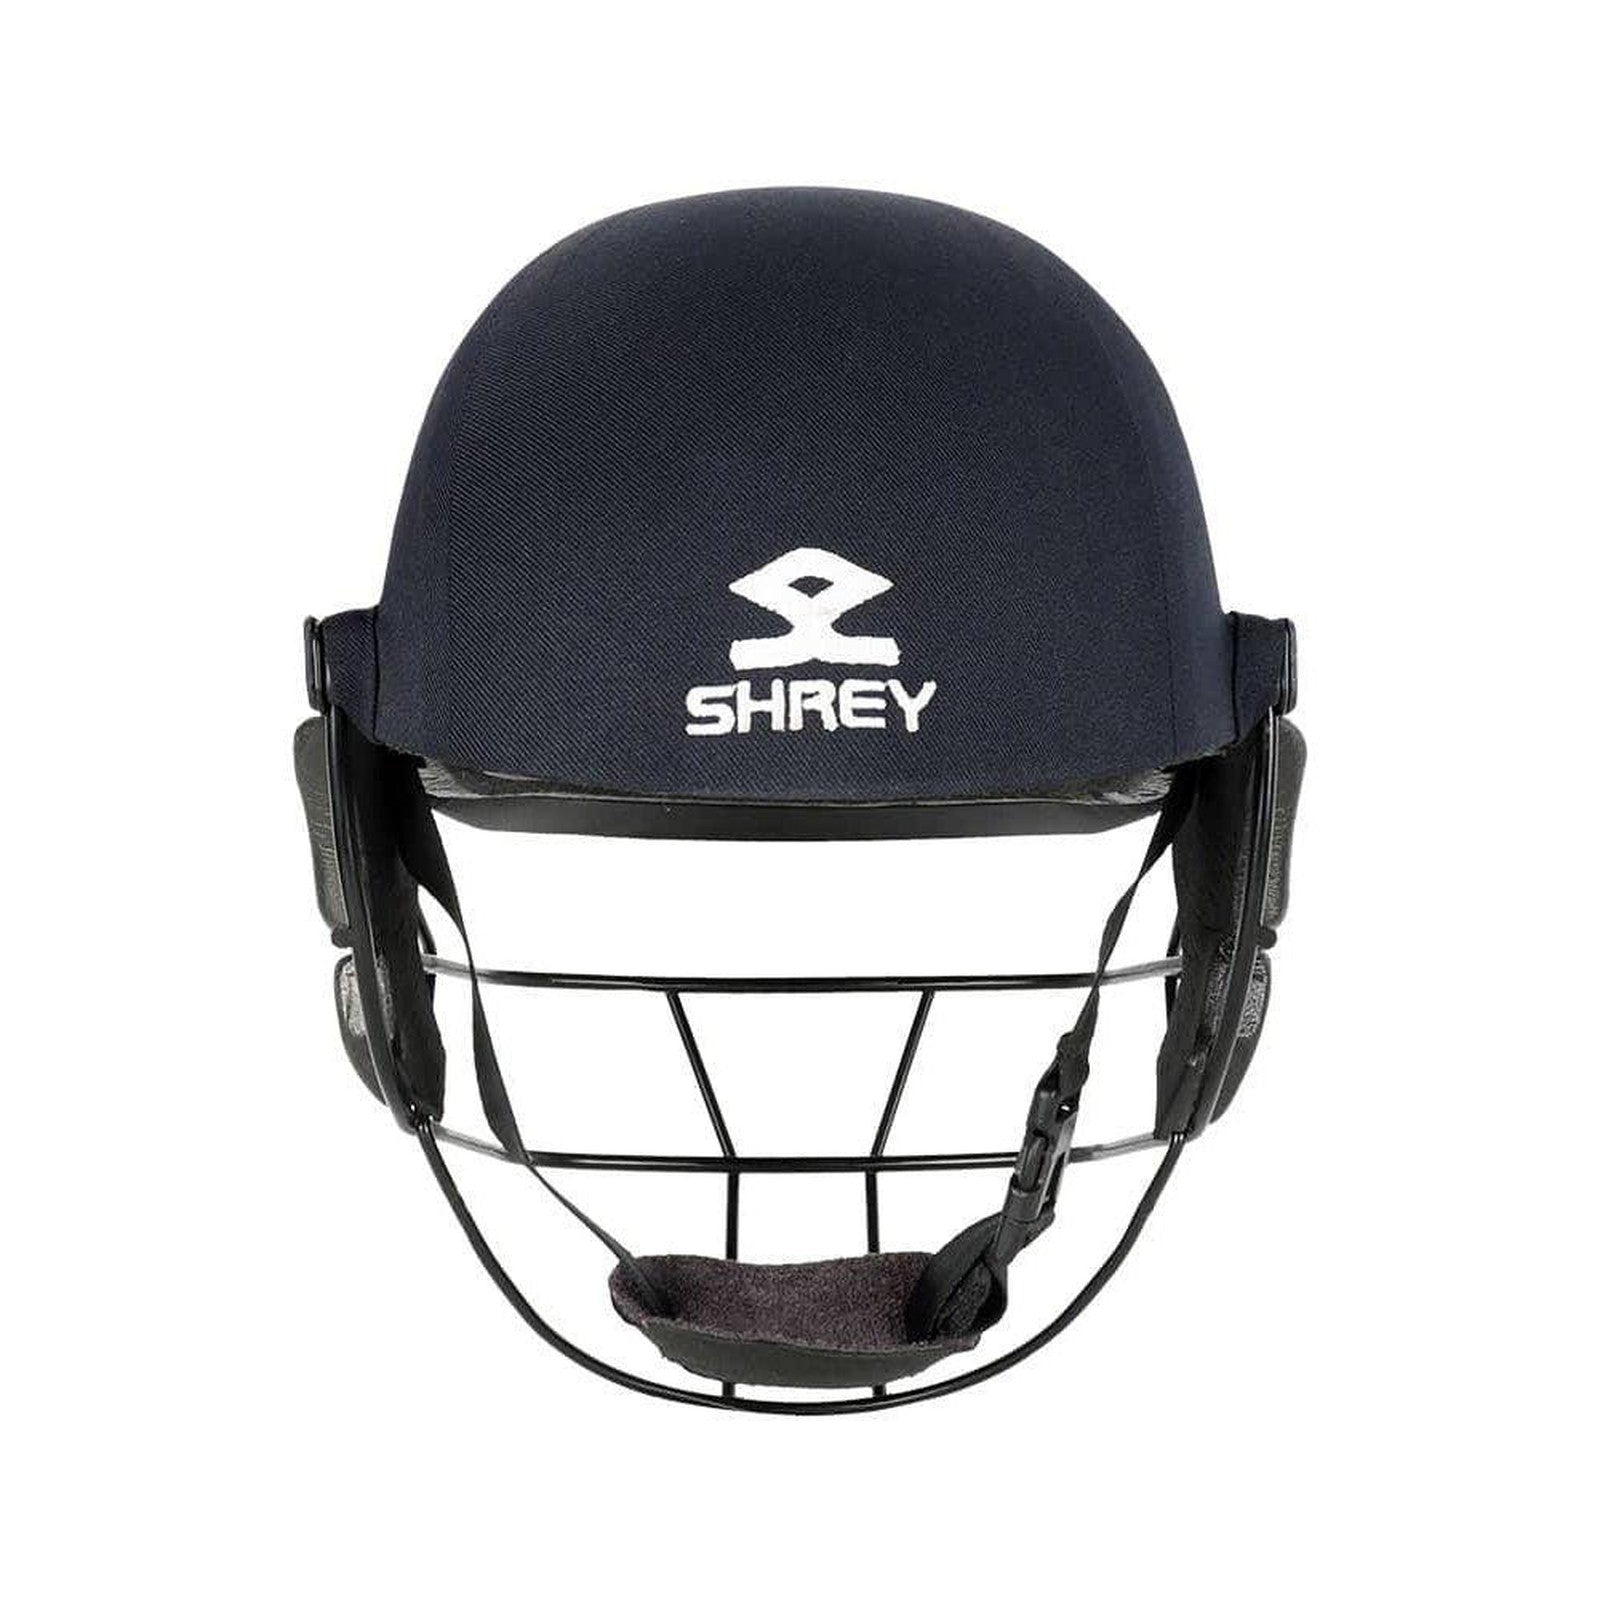 Shrey Armor 2.0 Cricket Helmet With Mild Steel Visor - Navy Senior